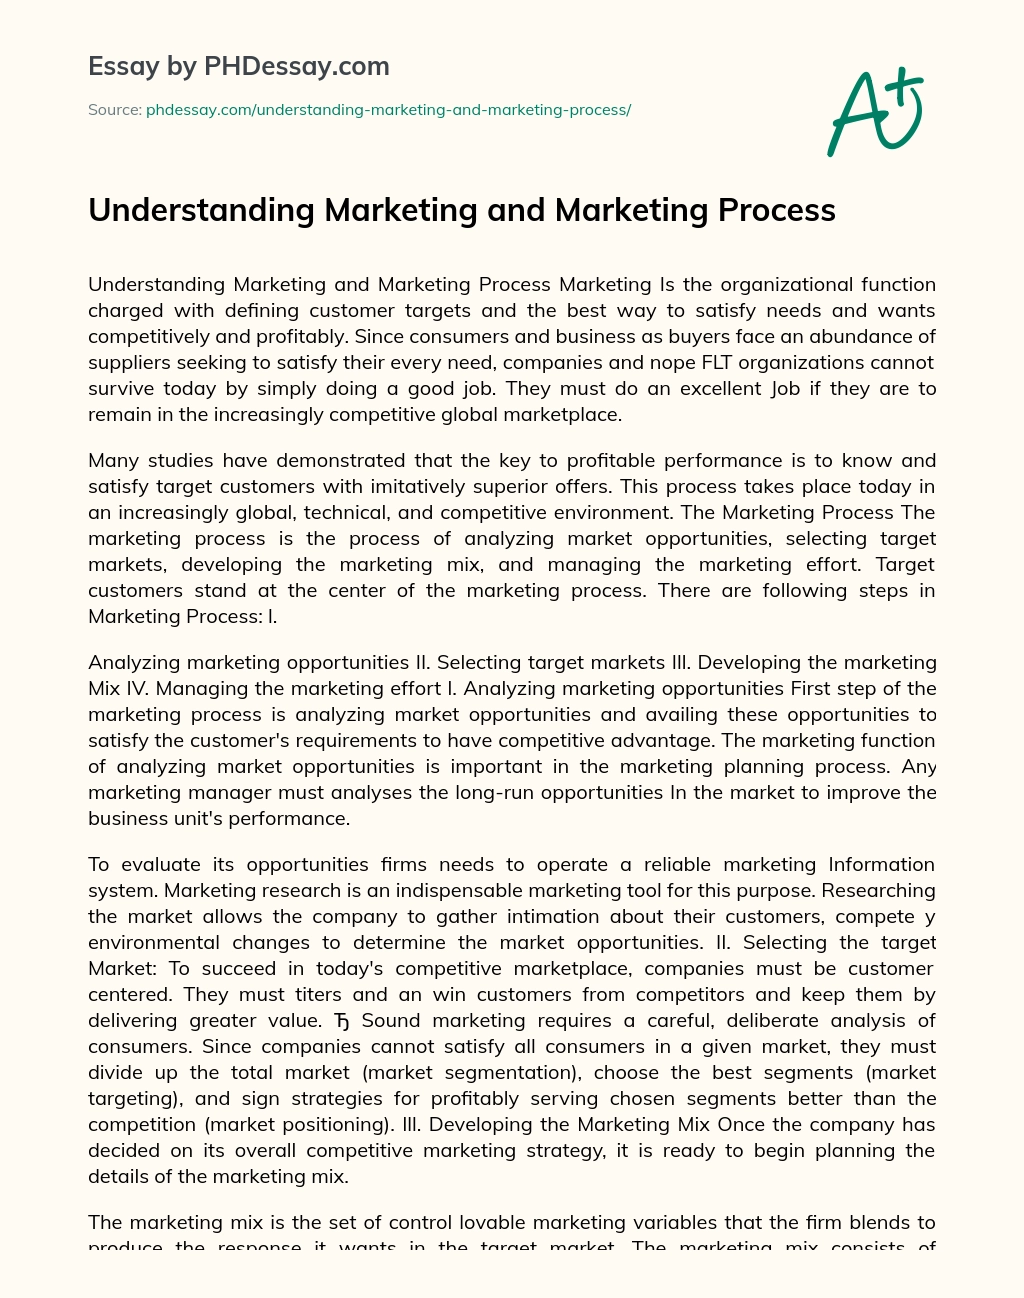 Understanding Marketing and Marketing Process essay